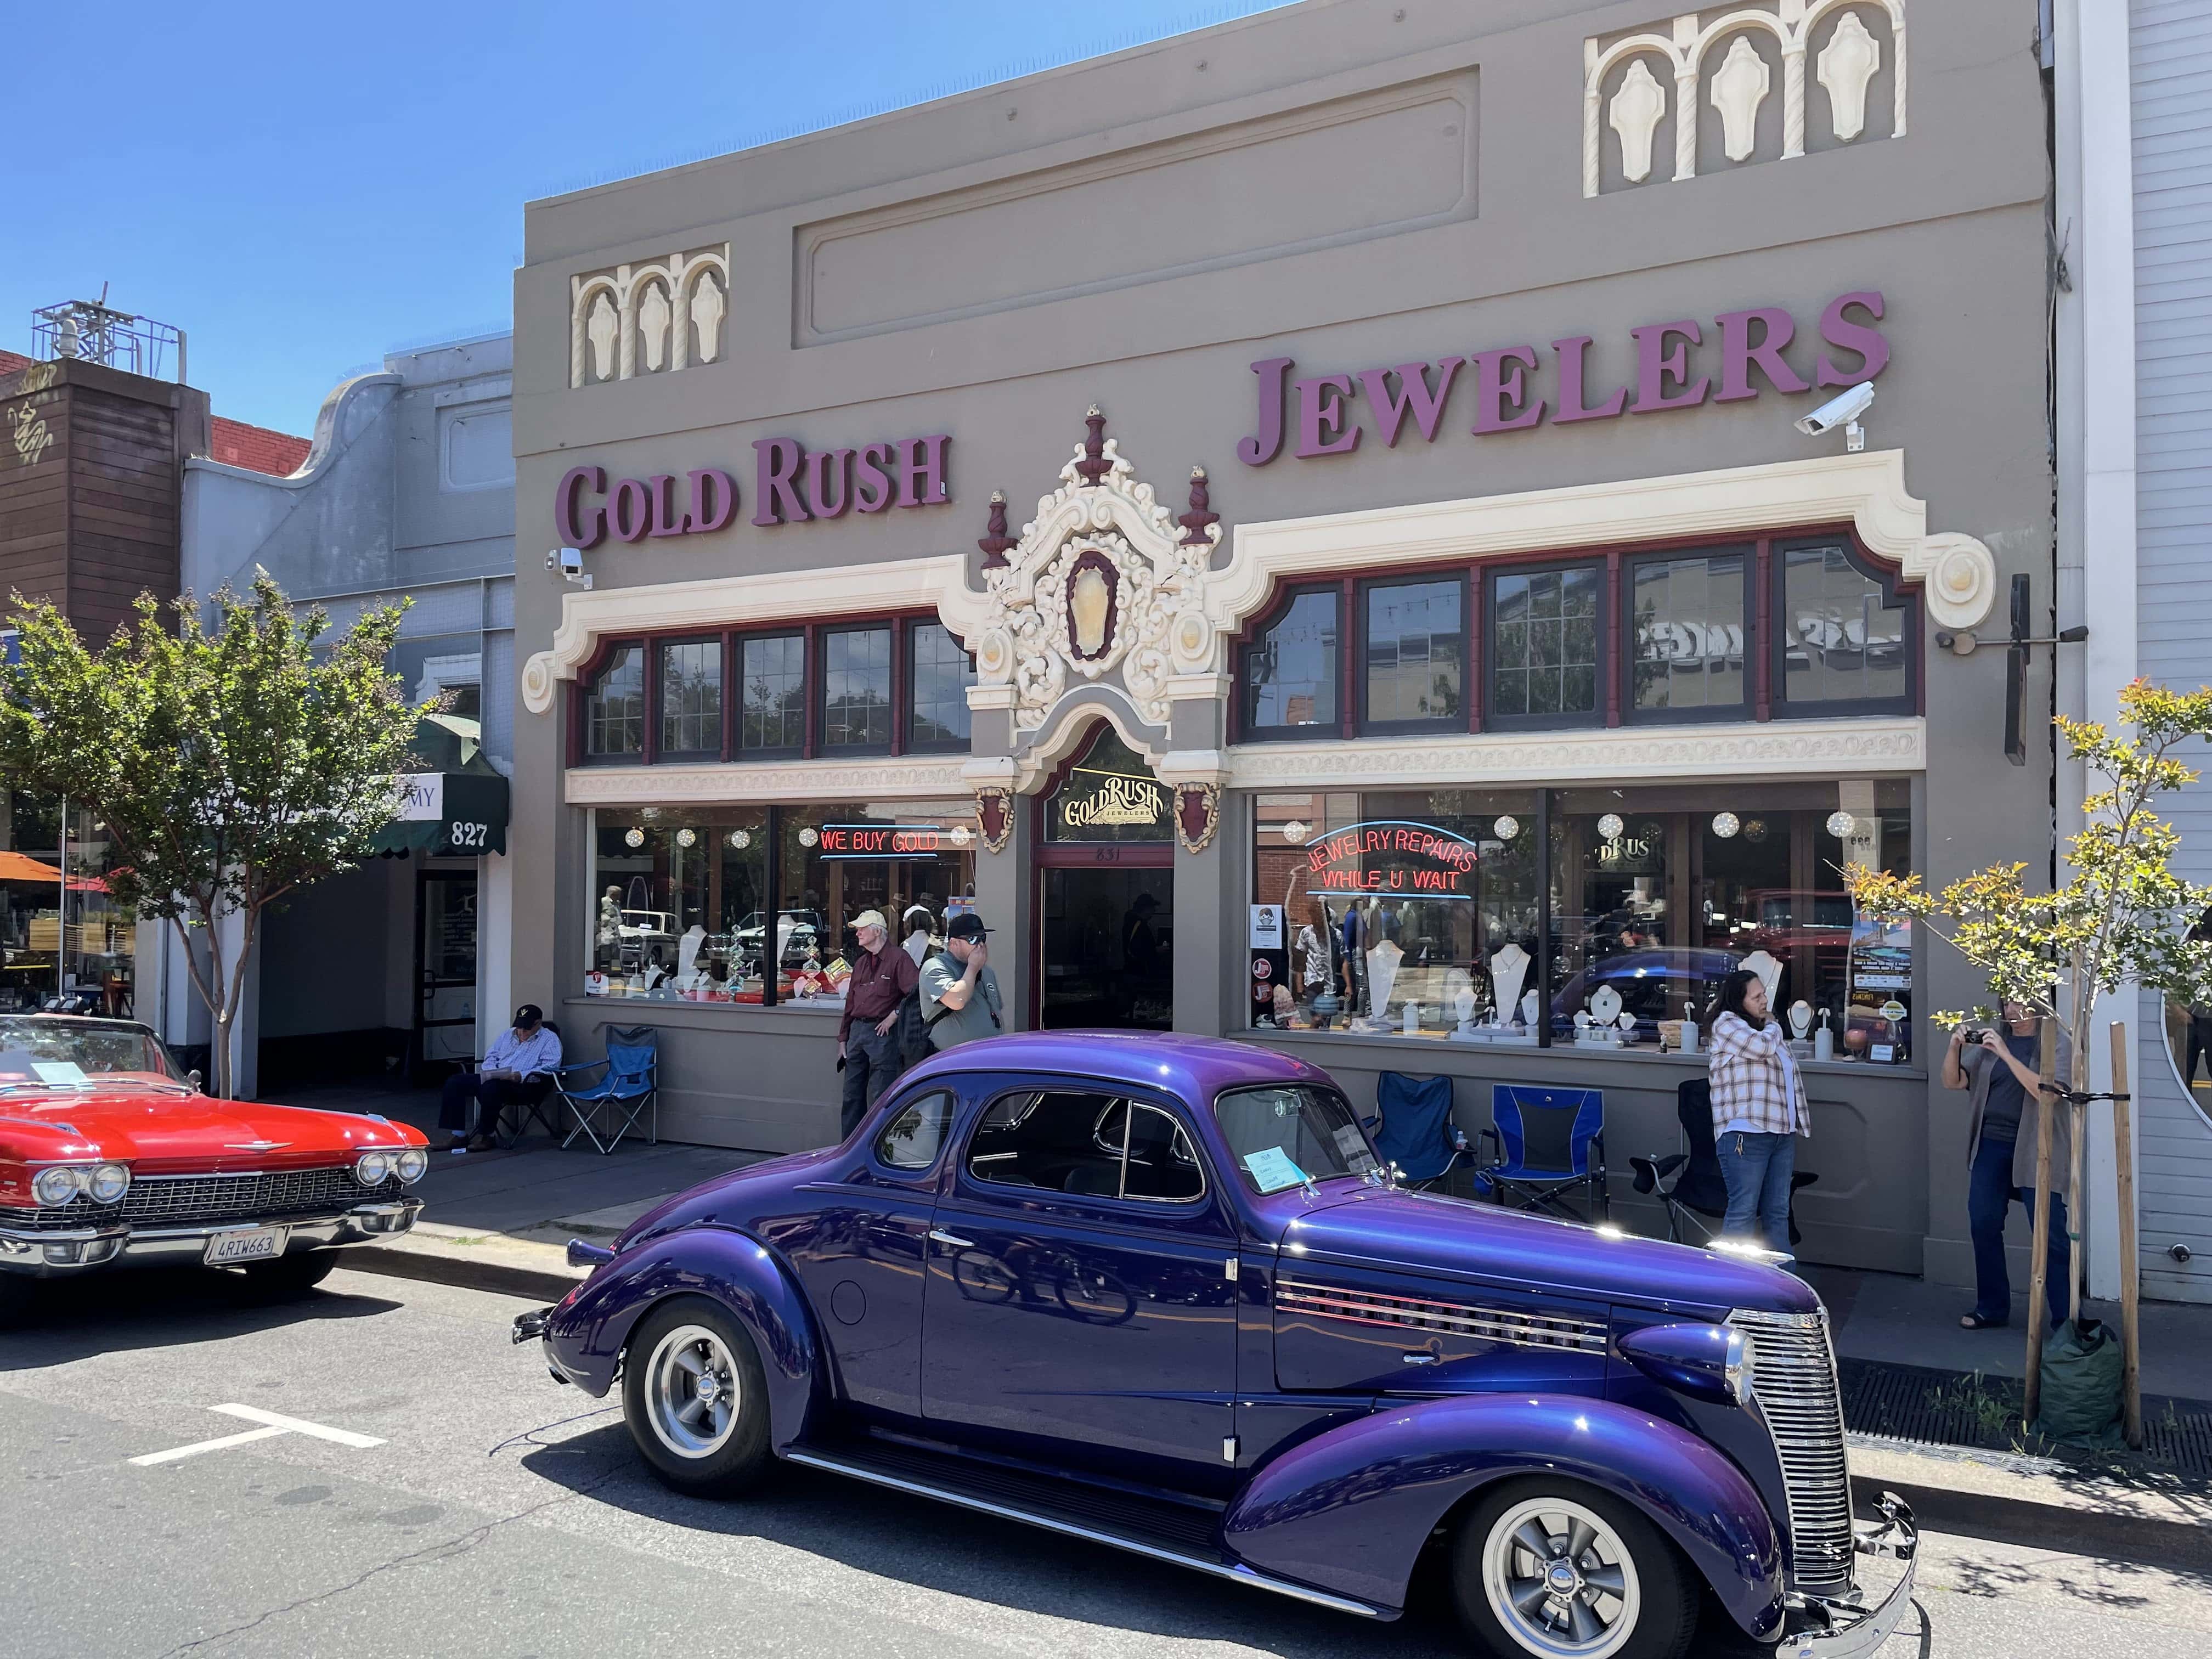 Gold Rush Jewelers - San Rafael (CA 94901), US, best online jewelry store